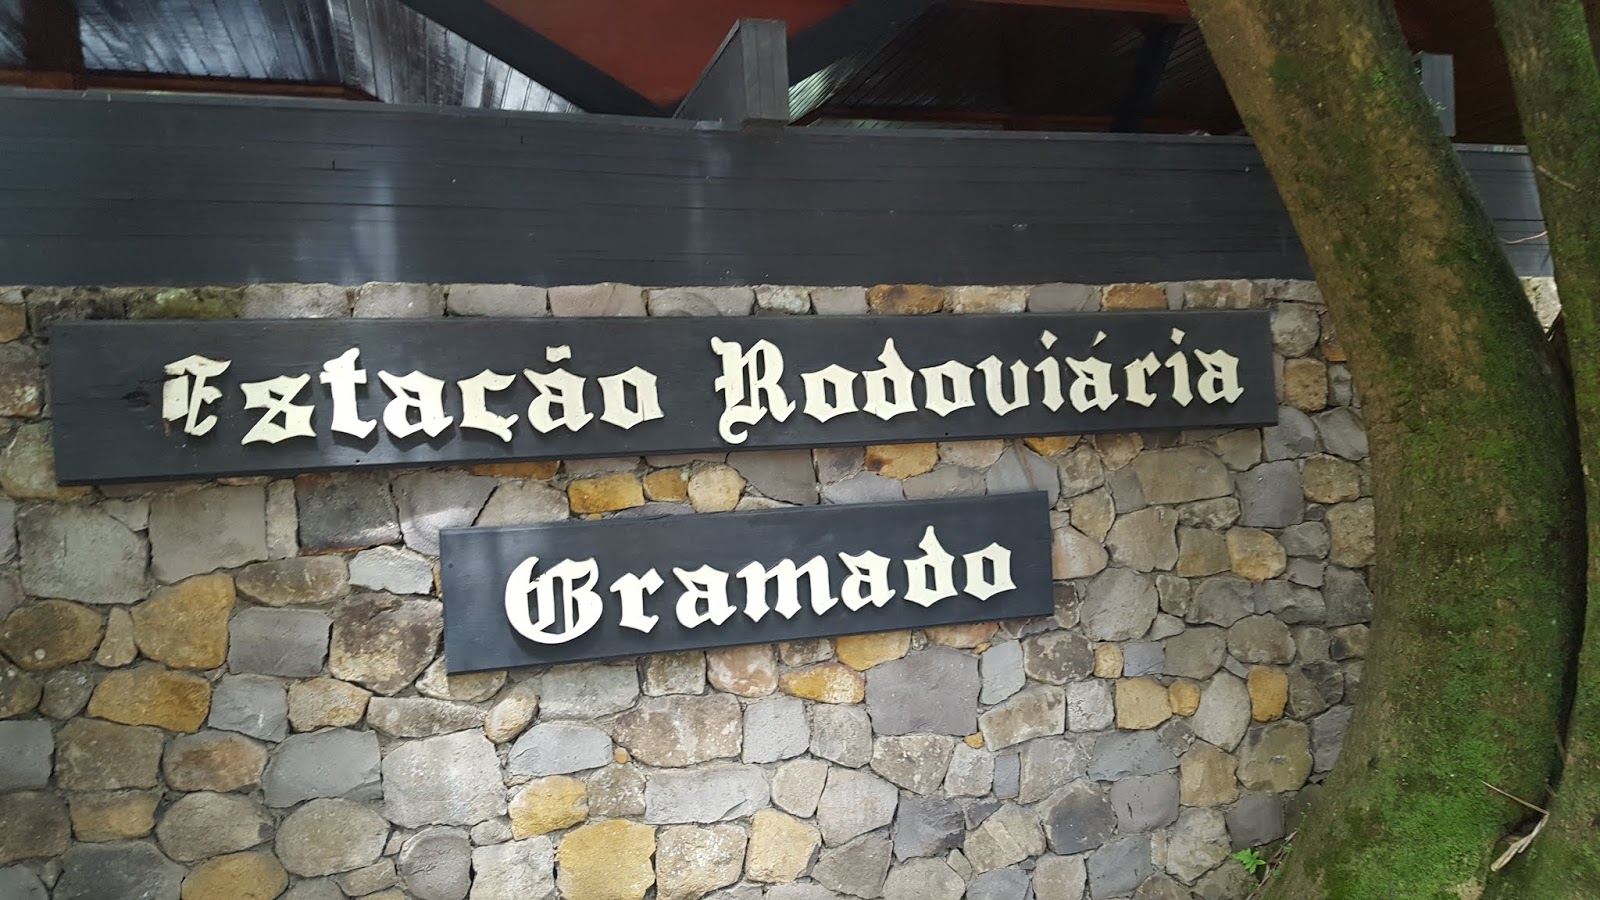 Serra Gaúcha - Gramado